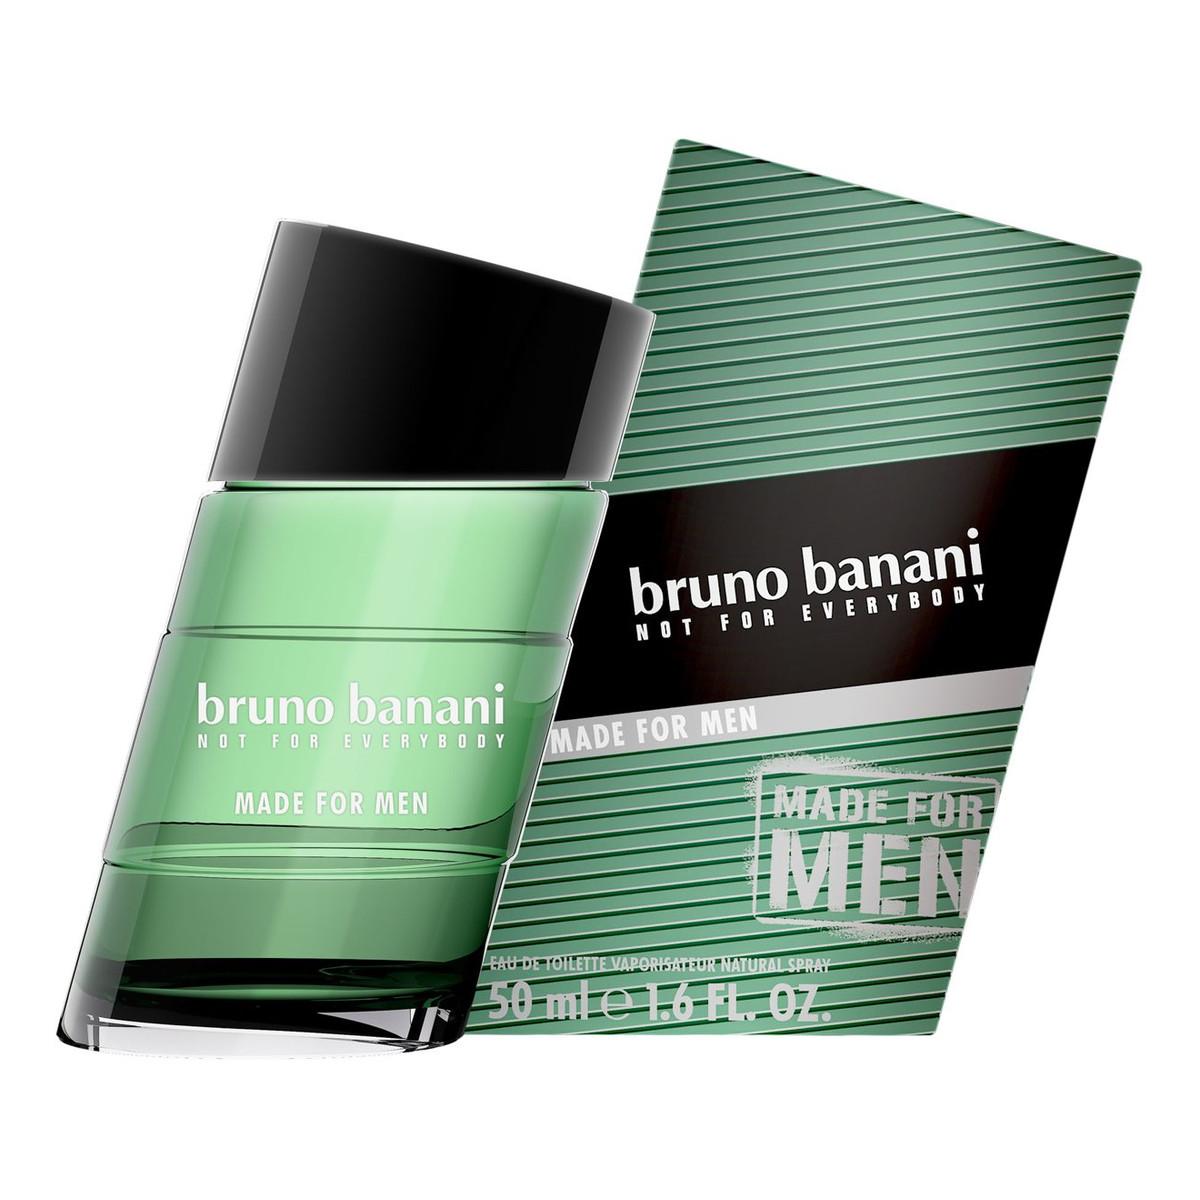 Bruno Banani Made for Men woda toaletowa 50ml